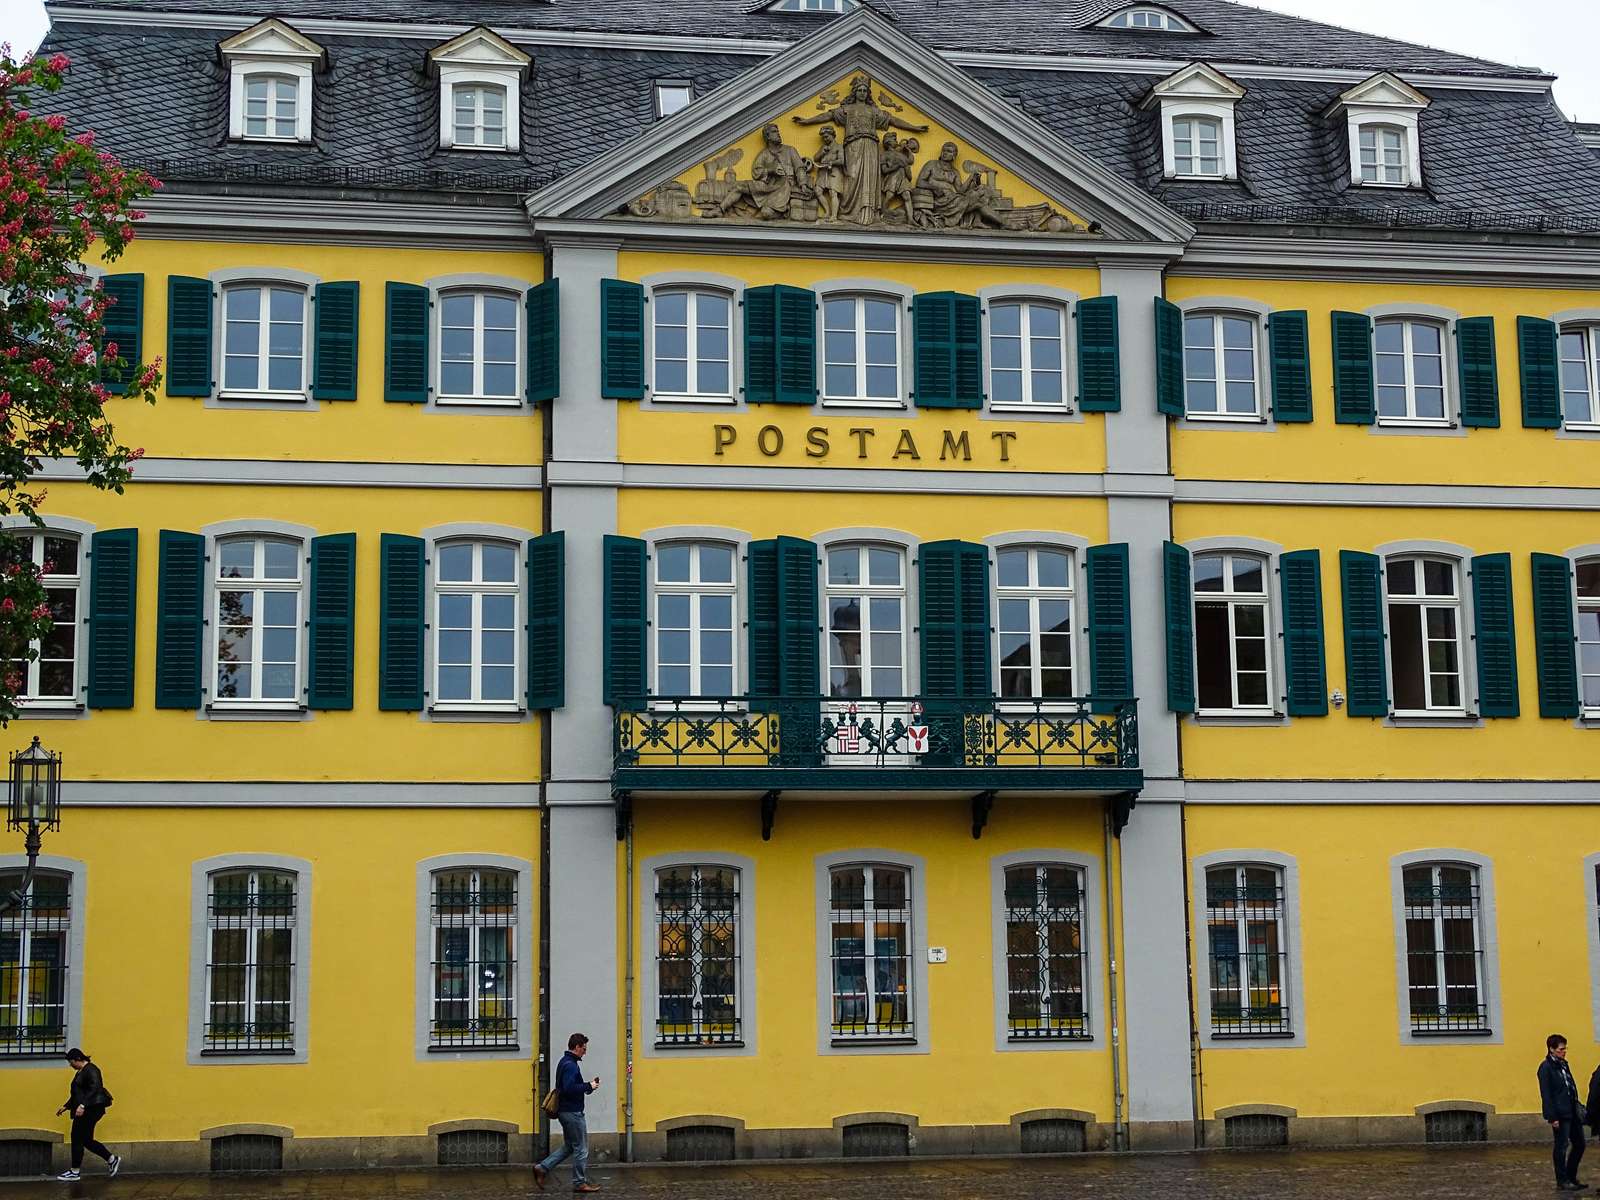 Postamt, Bonn, Germany jigsaw puzzle online